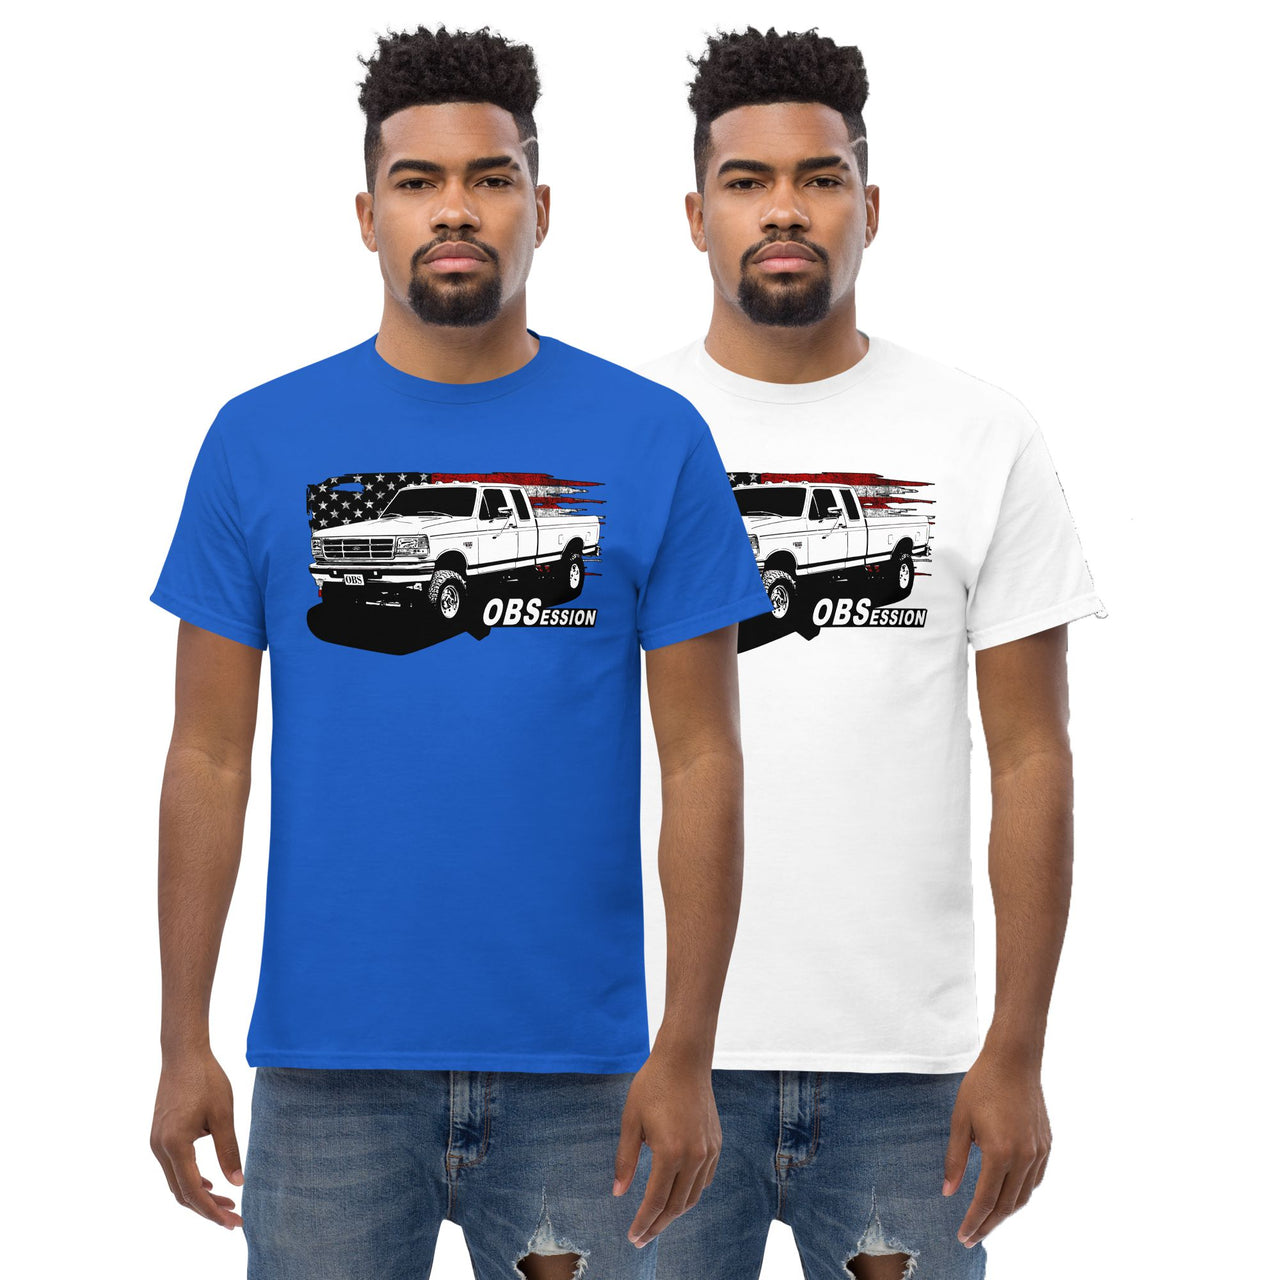 Patriotic OBS Ext Cab Truck T-shirt modeled